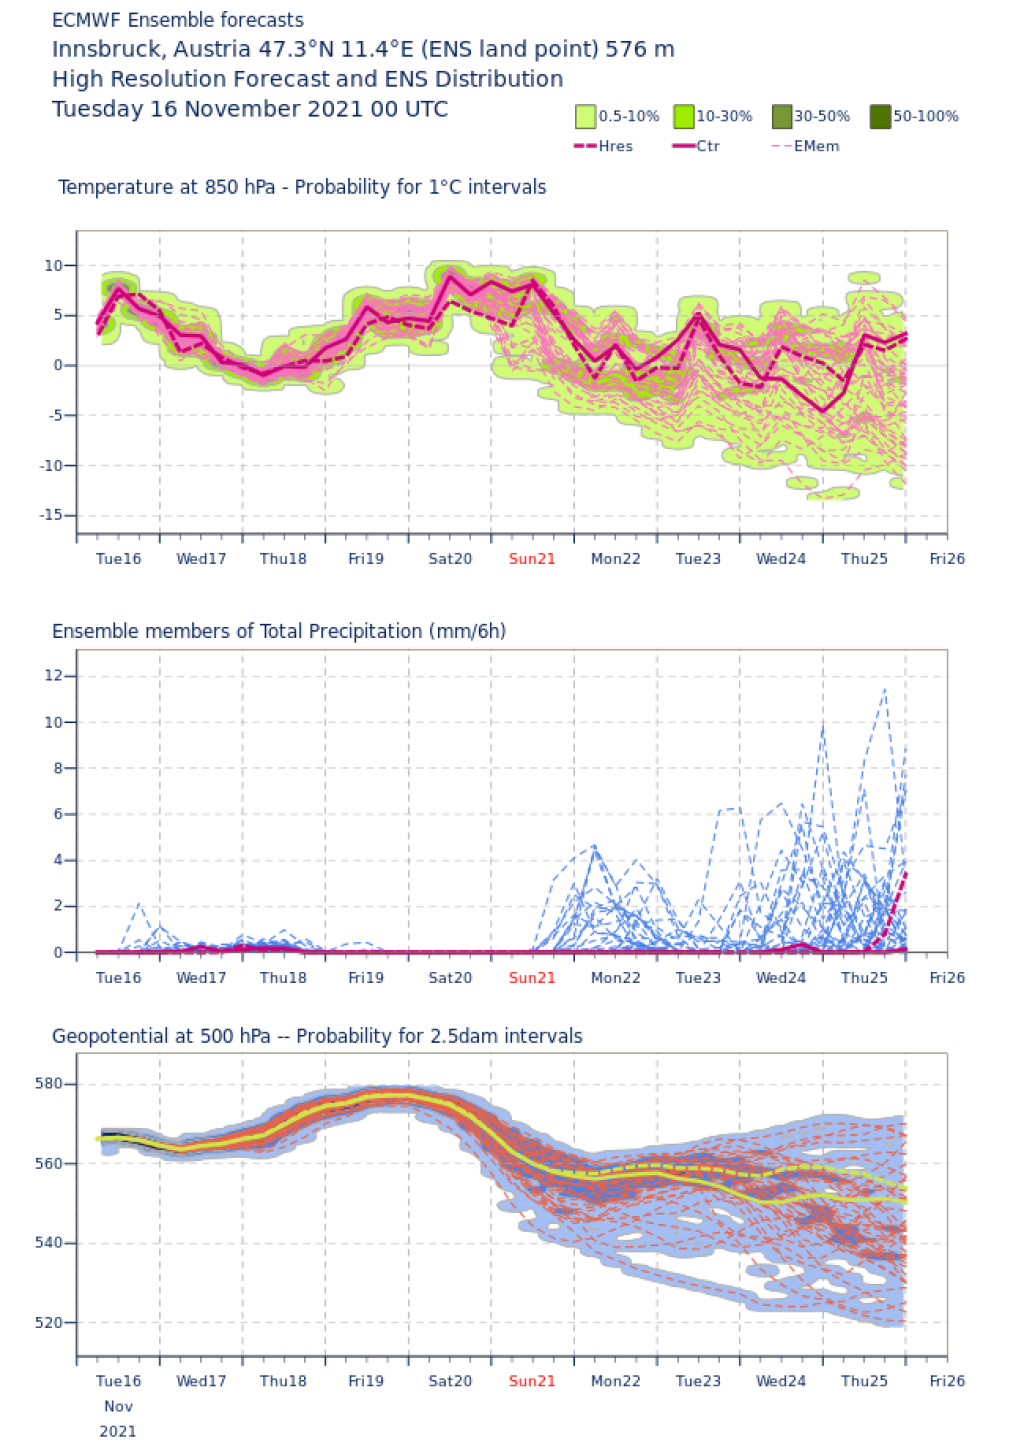 ECMWF Ensemnble forecast for Innsbruck. Uncertainty increases next week, temperature drop likely.